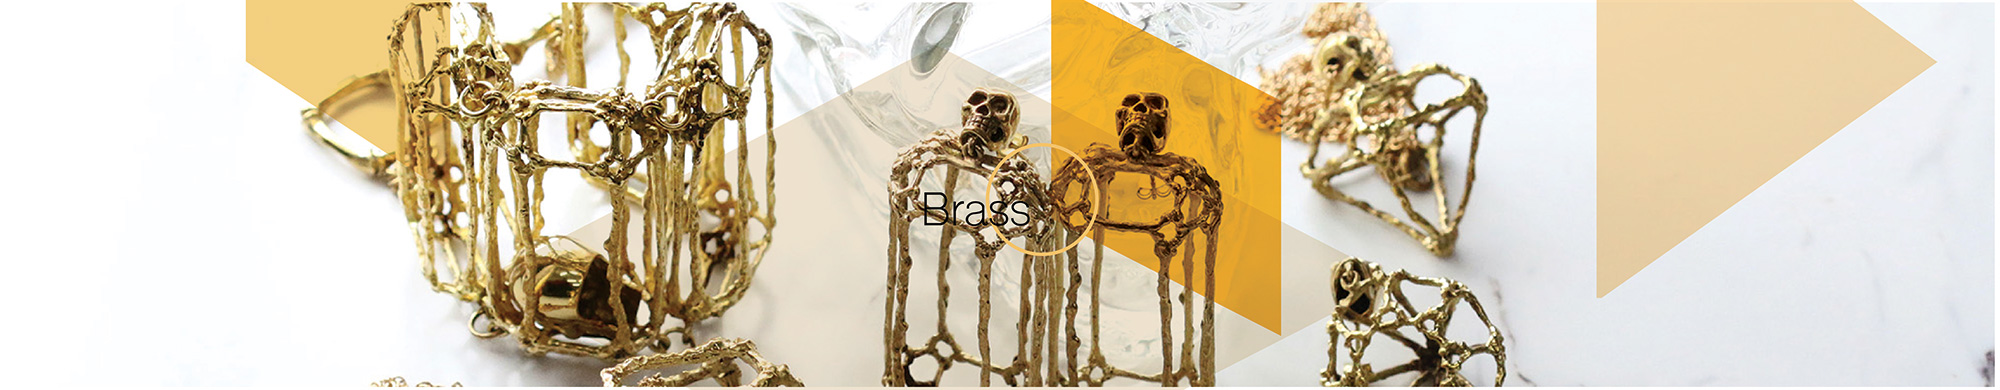 Brass-Banner-New-01